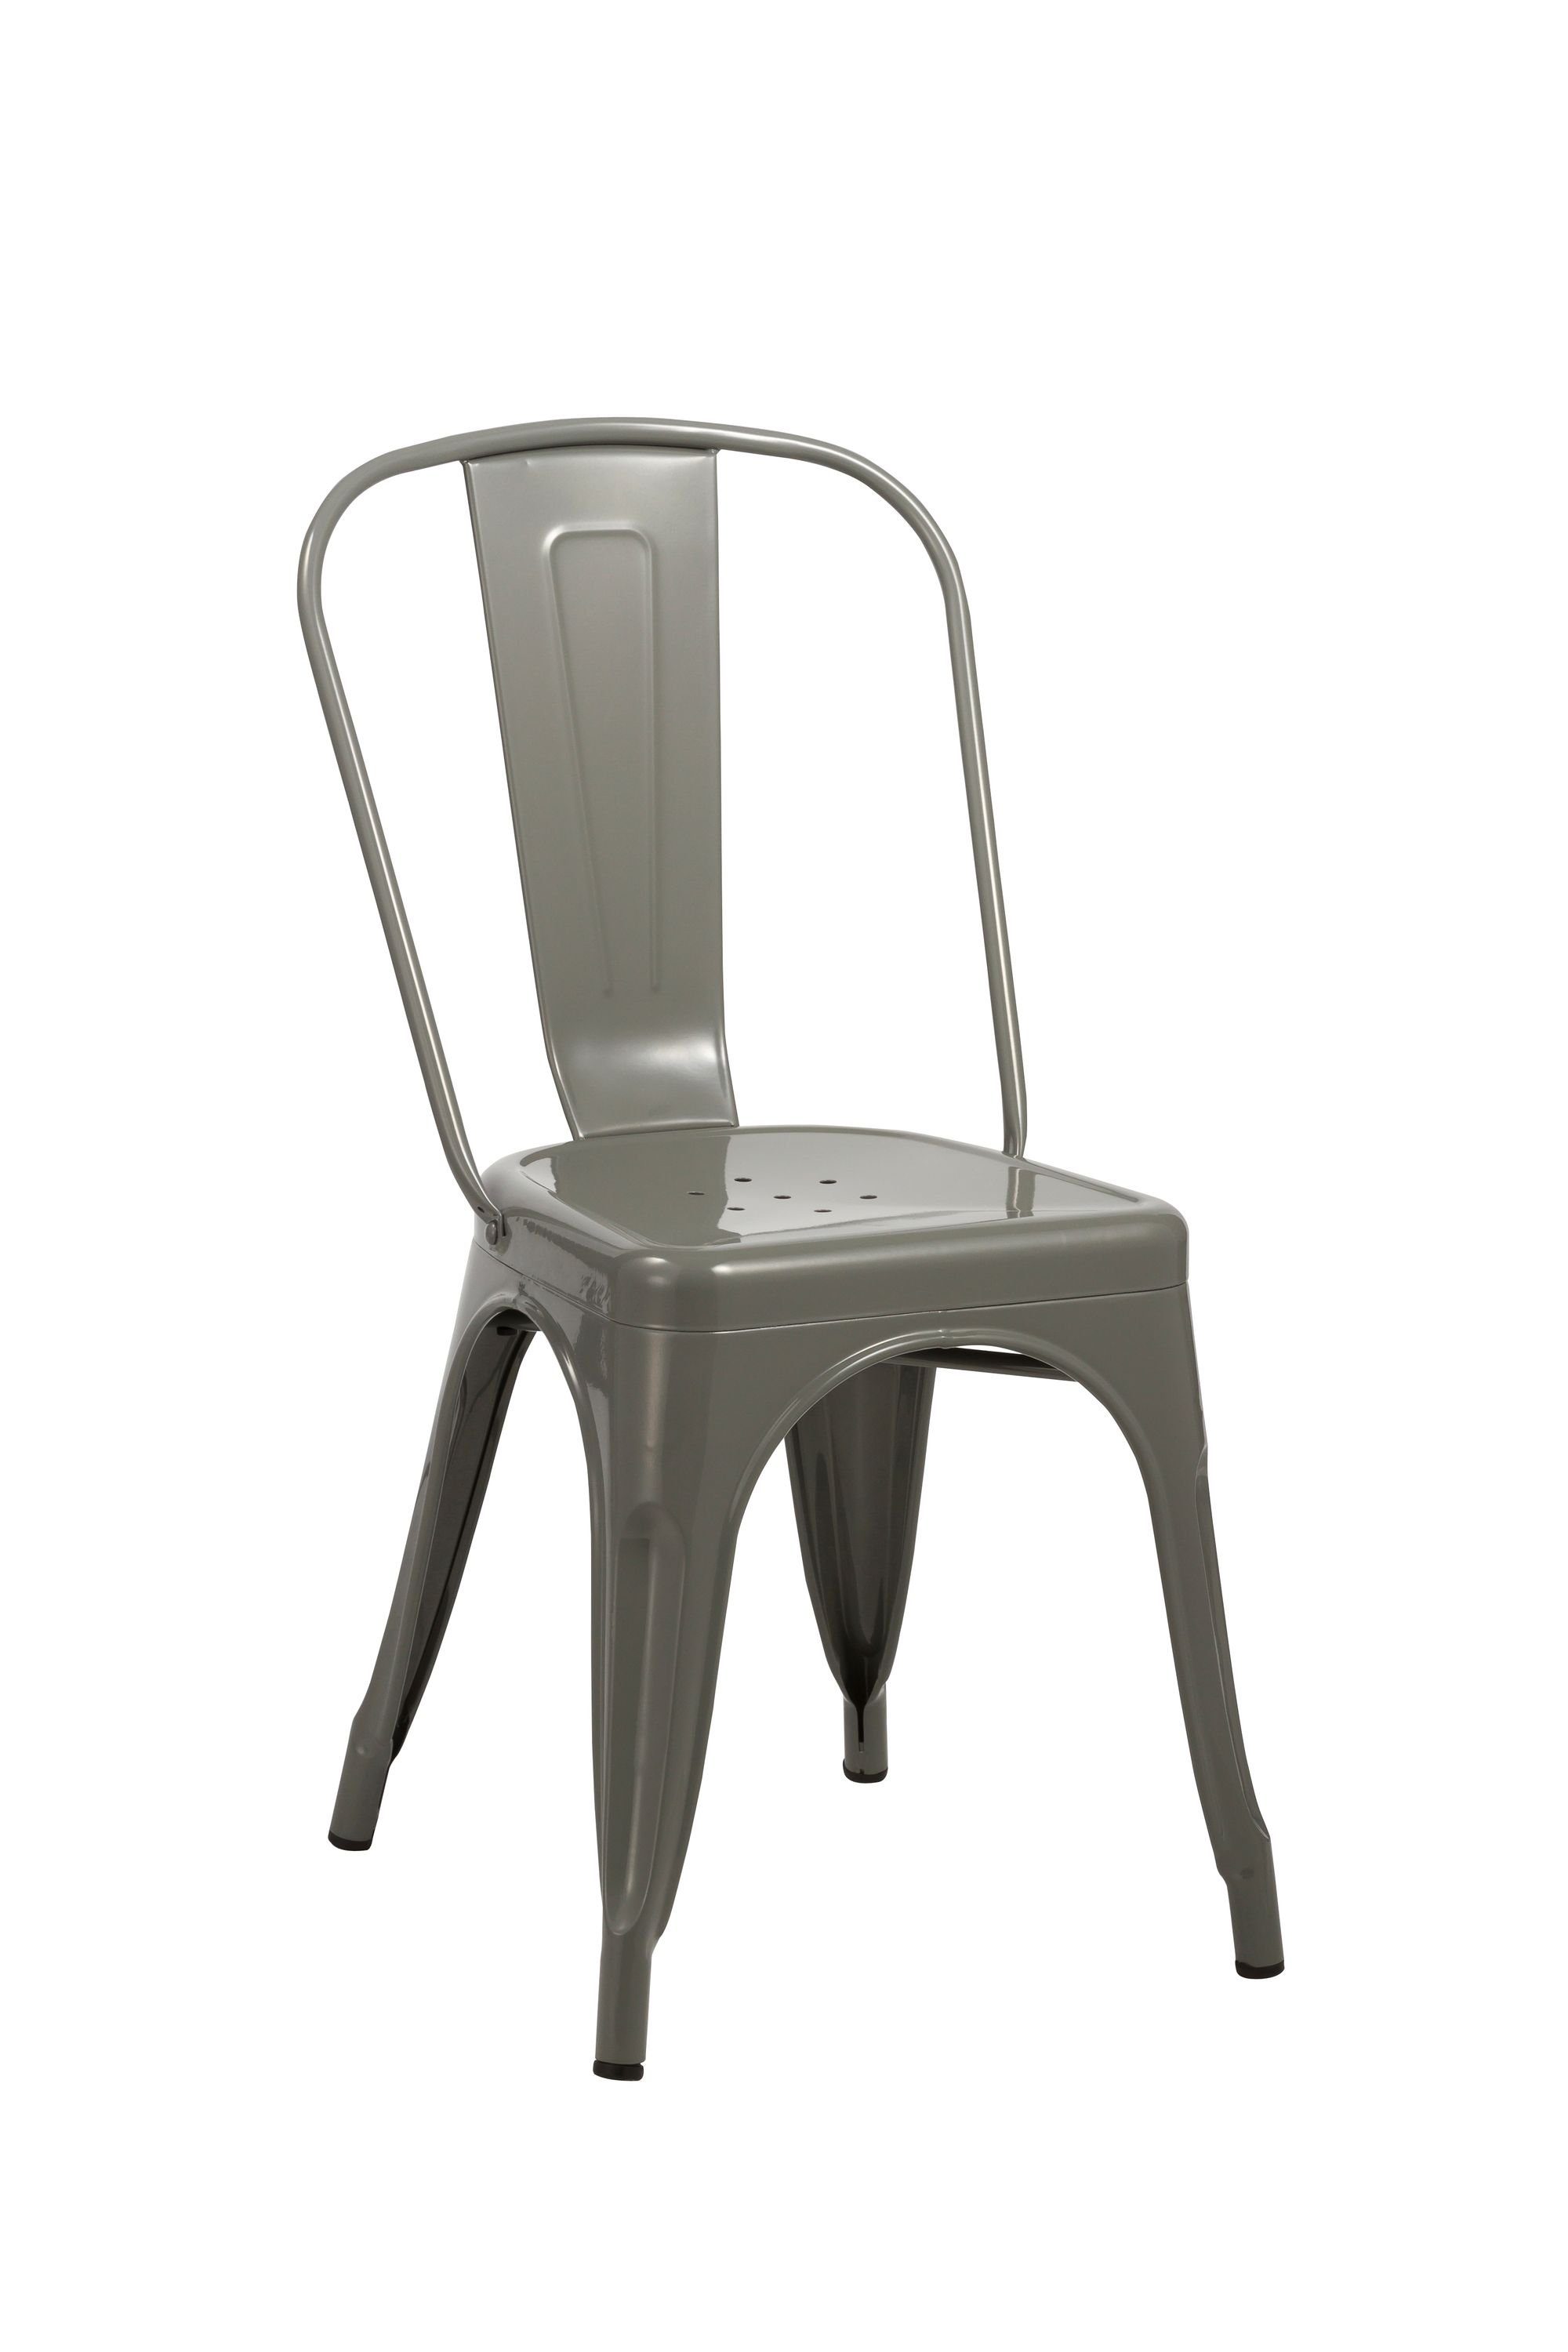 Duhome Esszimmerstuhl, Küchenstuhl Stuhl Esszimmerstuhl aus METALL Sitzfläche aus Holz stapelbar Grau